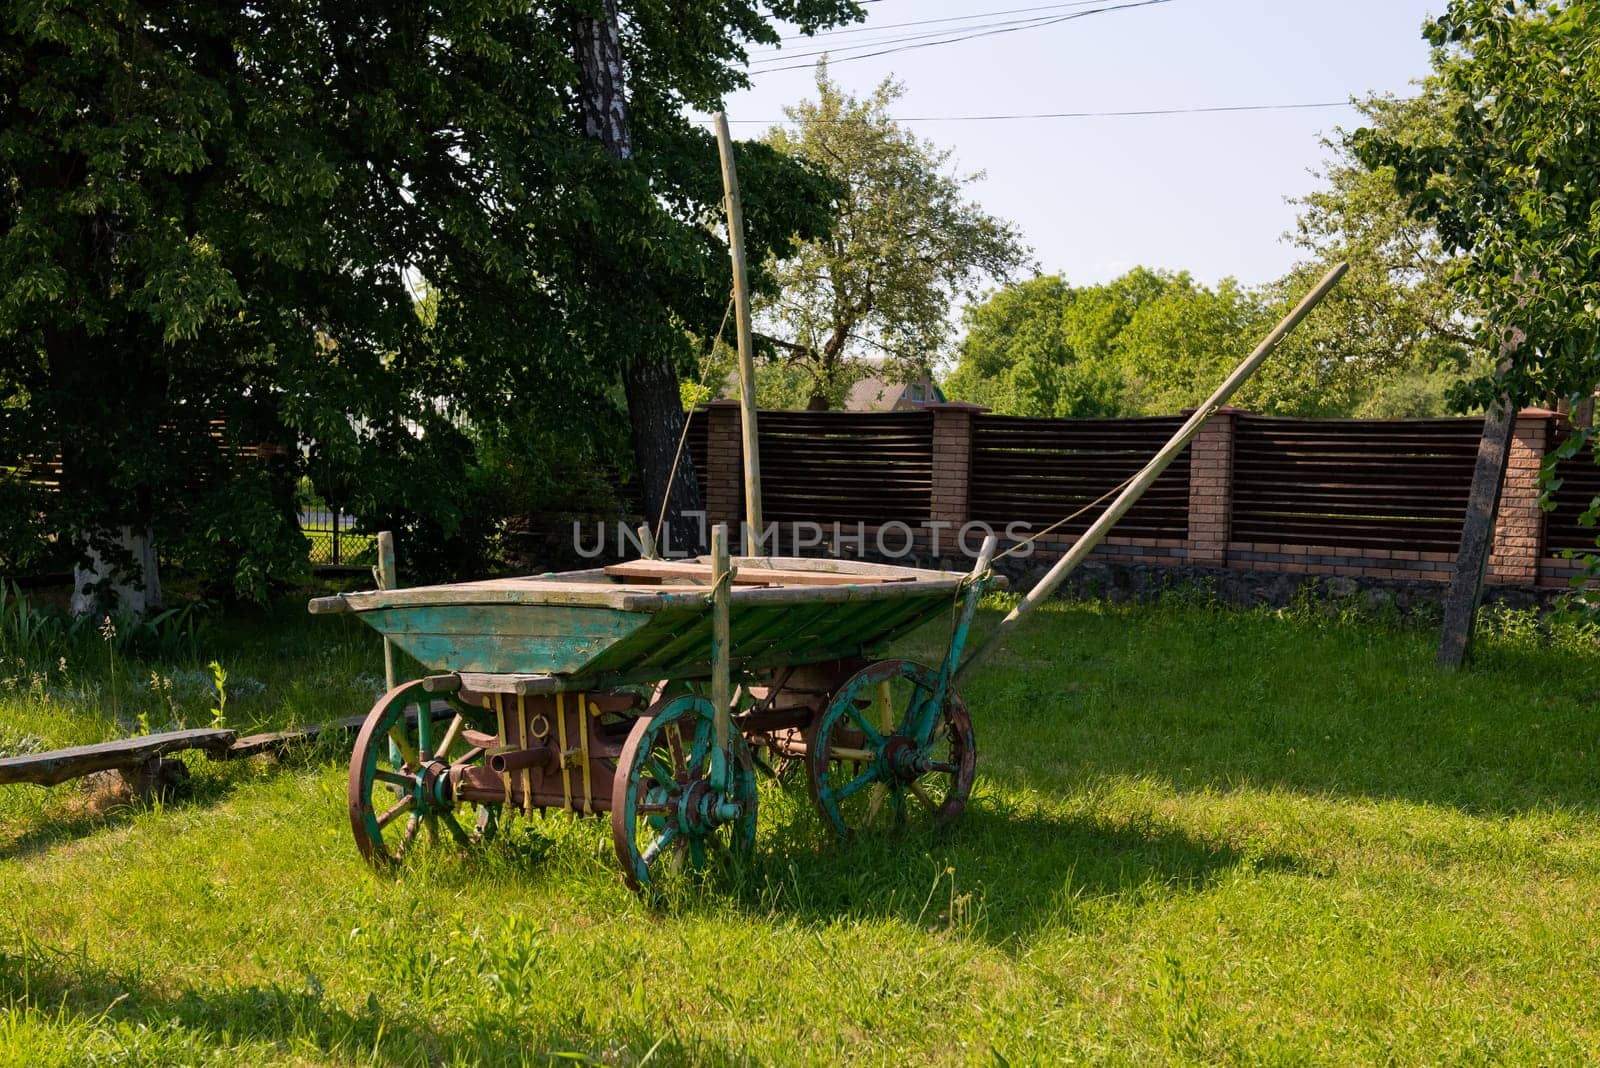 An old wooden vintage cart in rural.